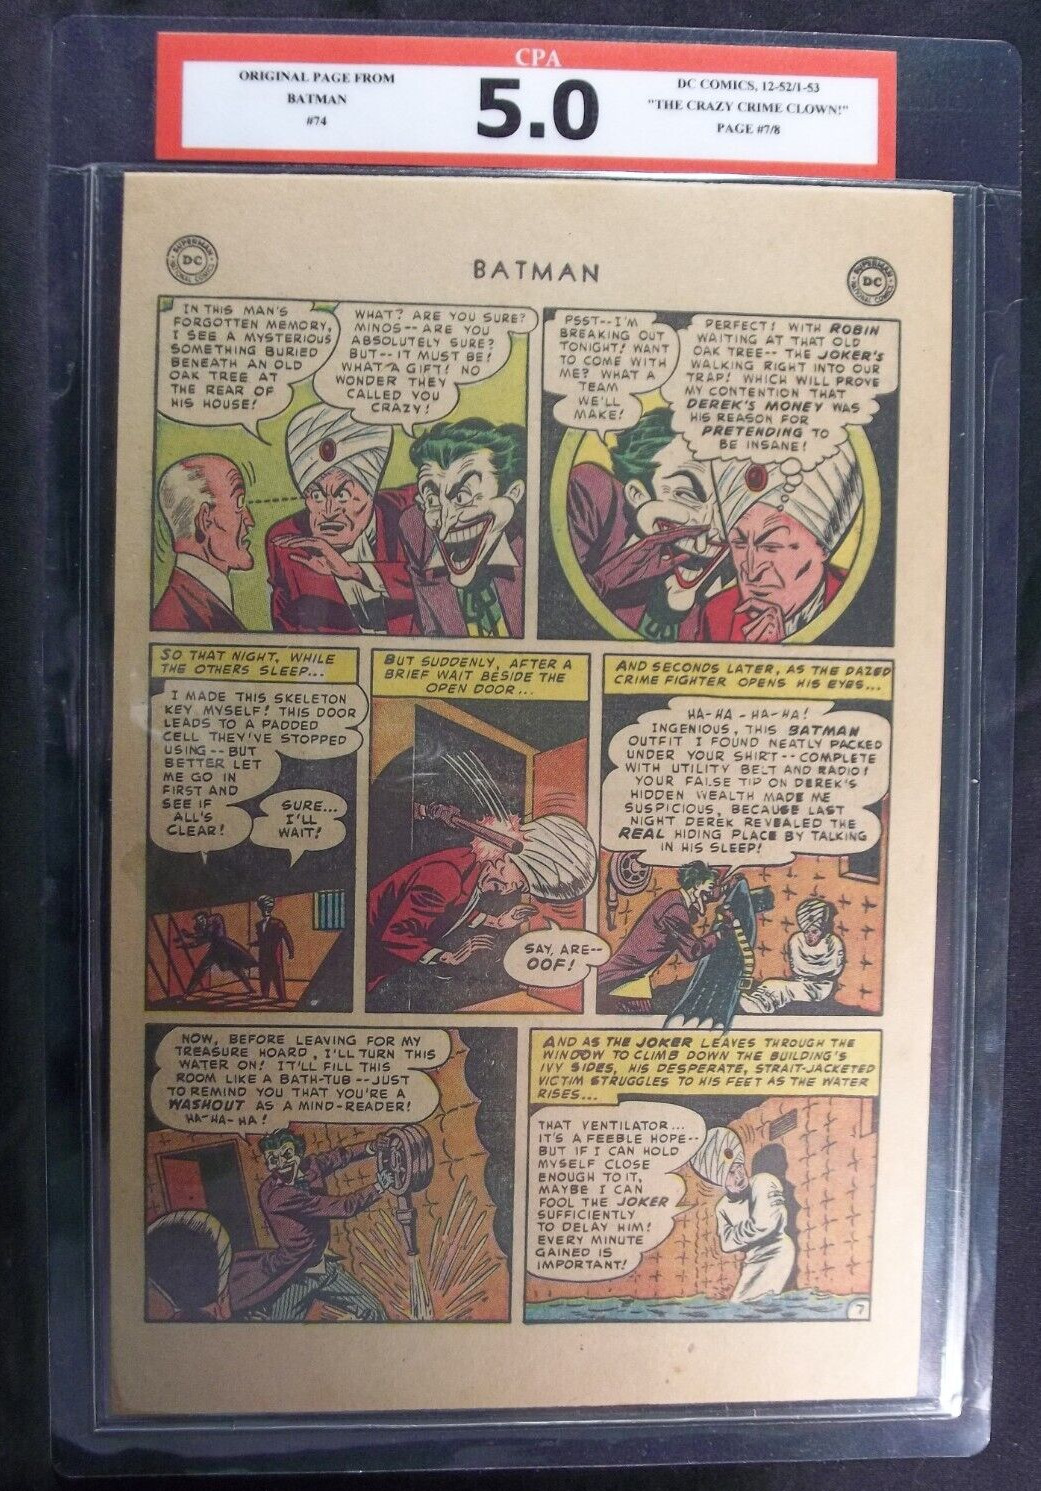 Batman #74 CPA 5.0 SINGLE PAGE #7/8 Joker app. Dick Sprang art